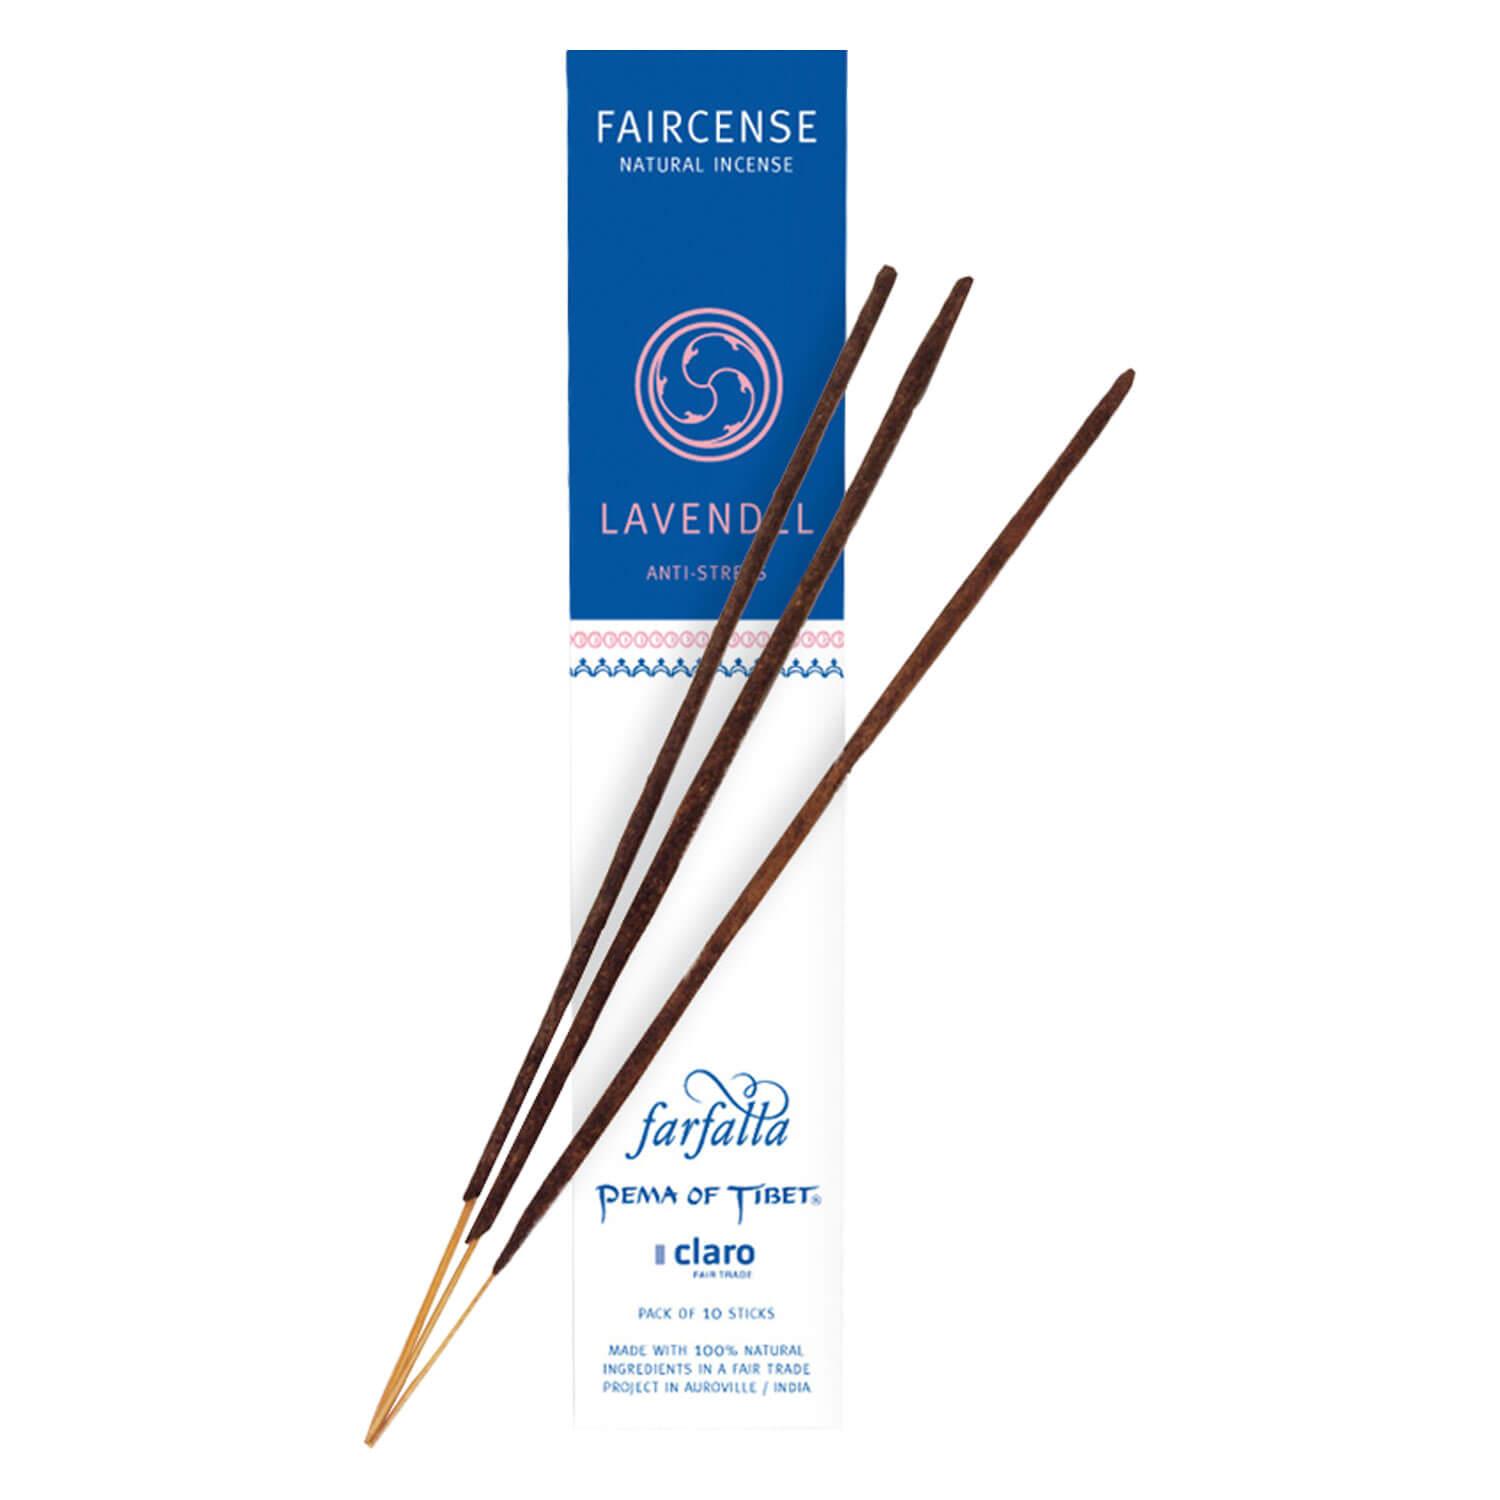 Farfalla Räucherstäbchen - Lavender/Anti-Stress - Faircense Incense Sticks